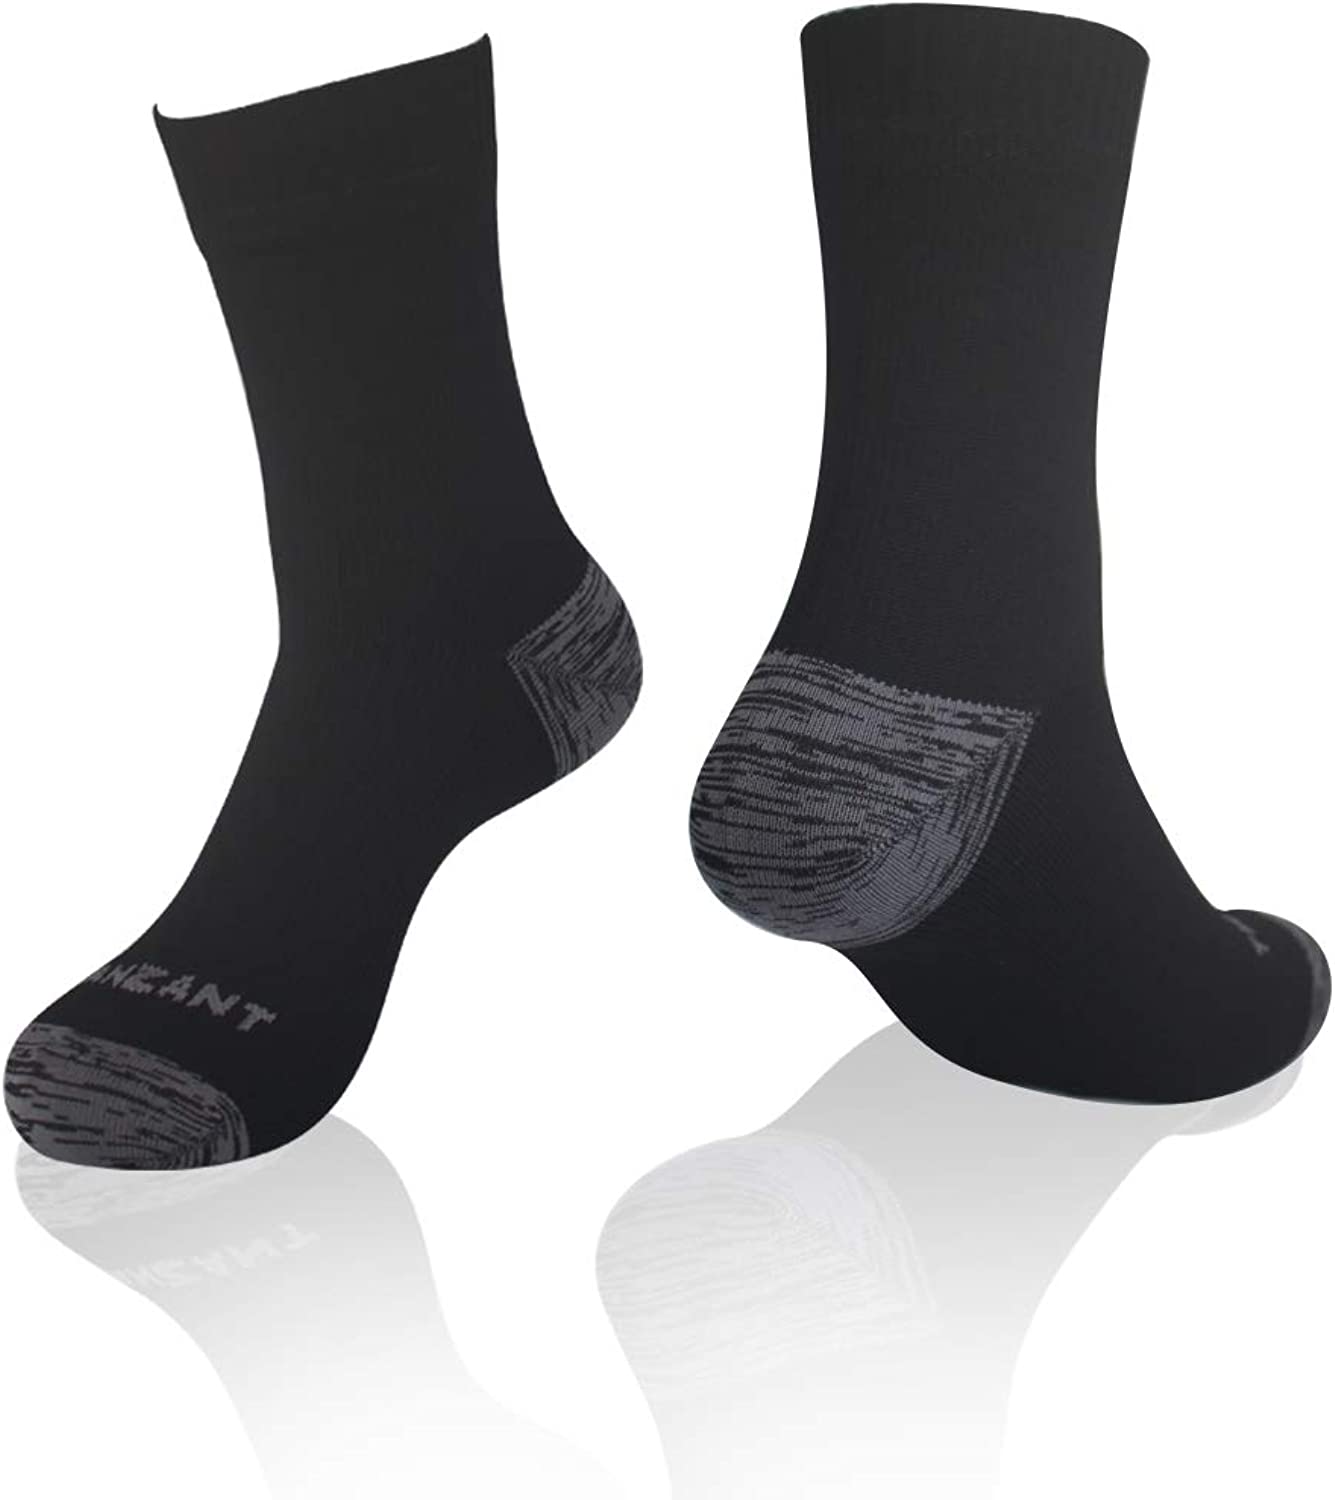 TANZANT 100%Waterproof socks, Hiking Cycling Fishing Kayaking Unisex Novelty Sport Socks Large size 1 Pair